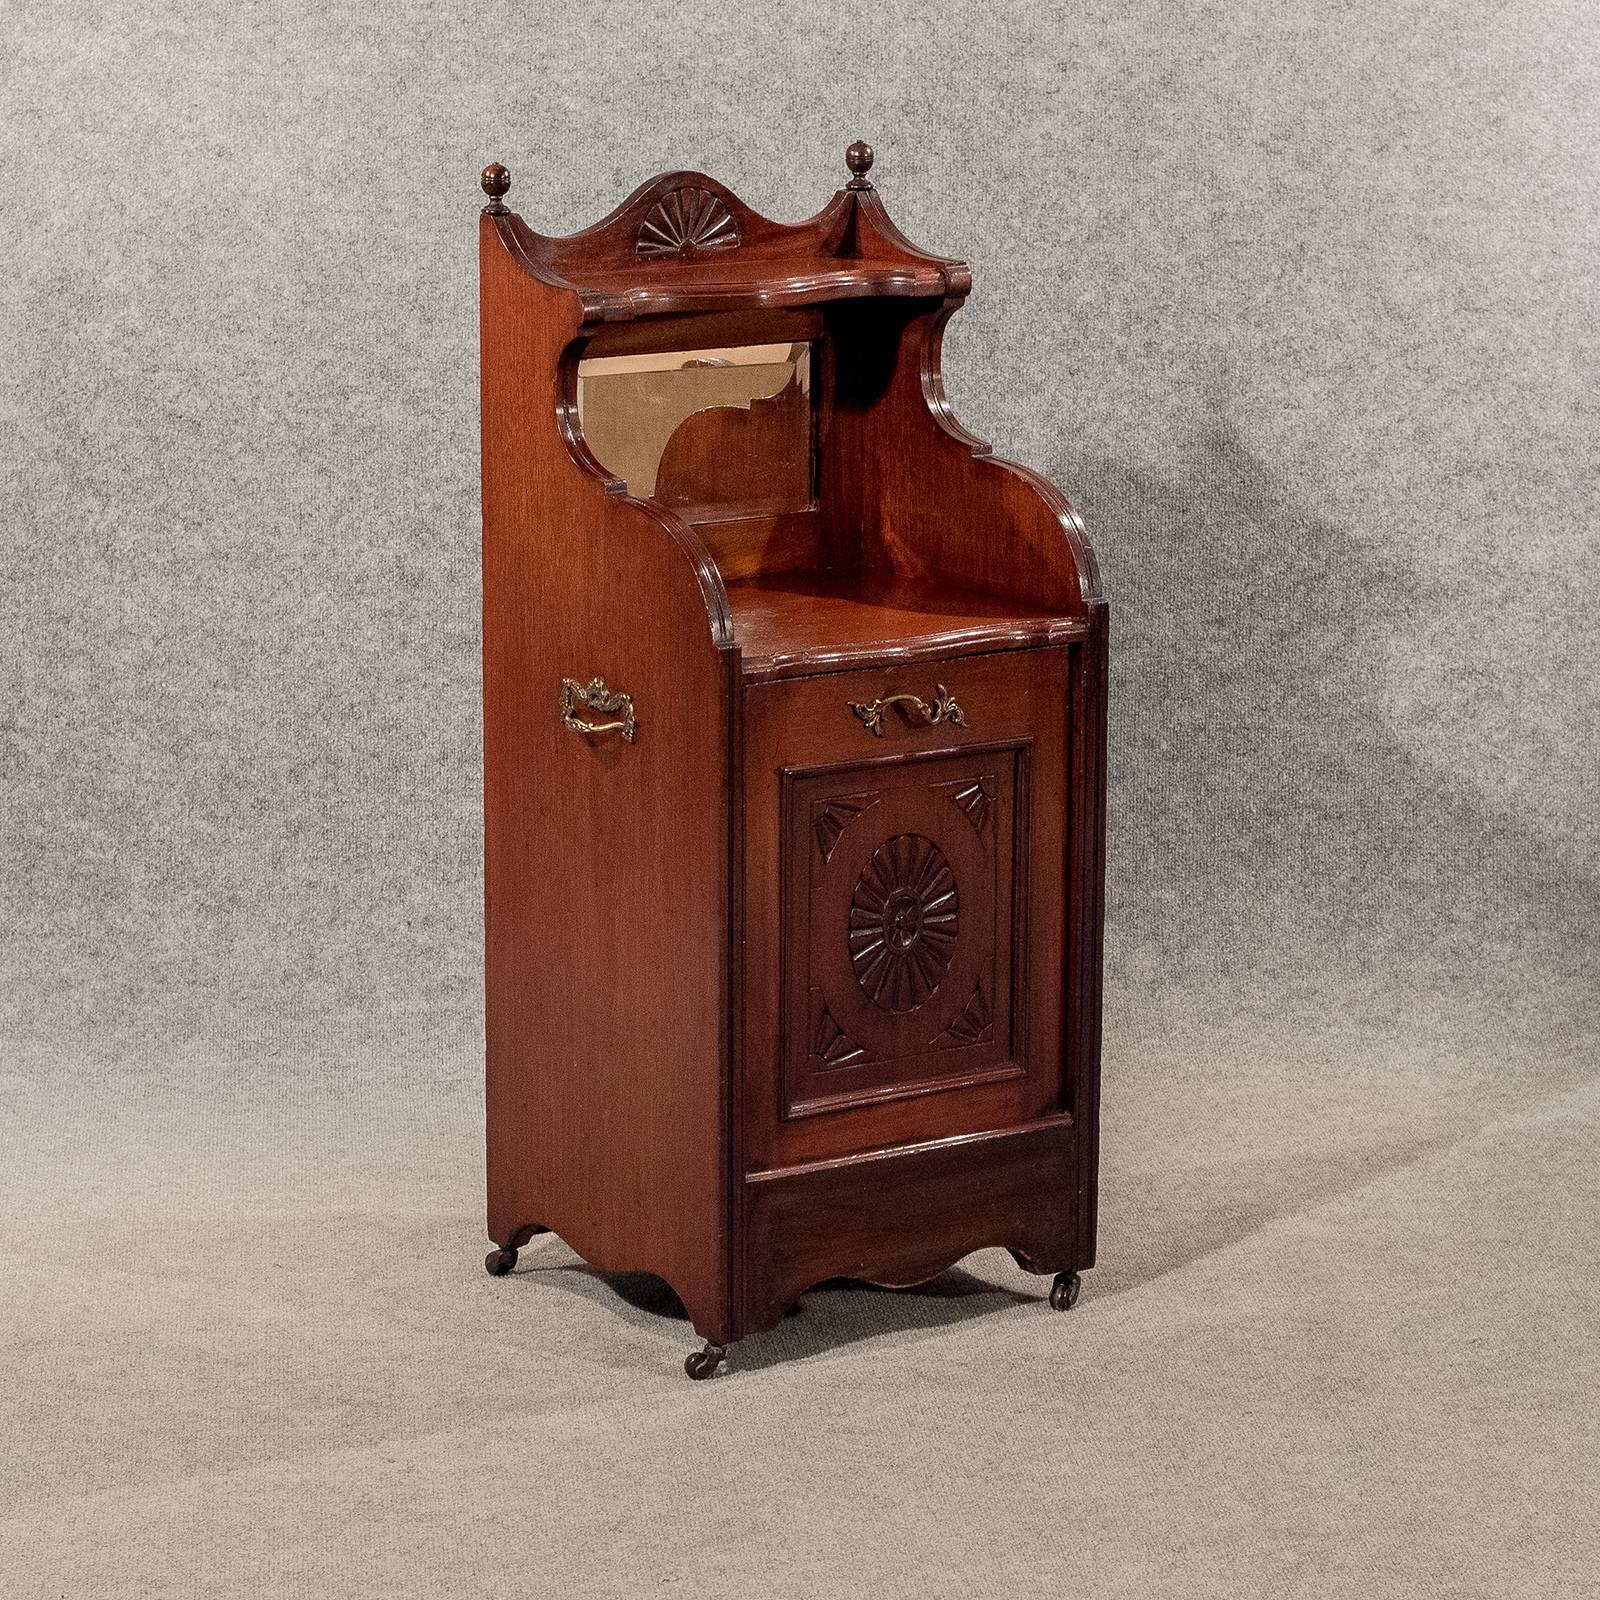 Early 20th Century Antique Log Bin Coal Purdonium Cabinet Fire Side Hearth Store Walnut, circa 1910